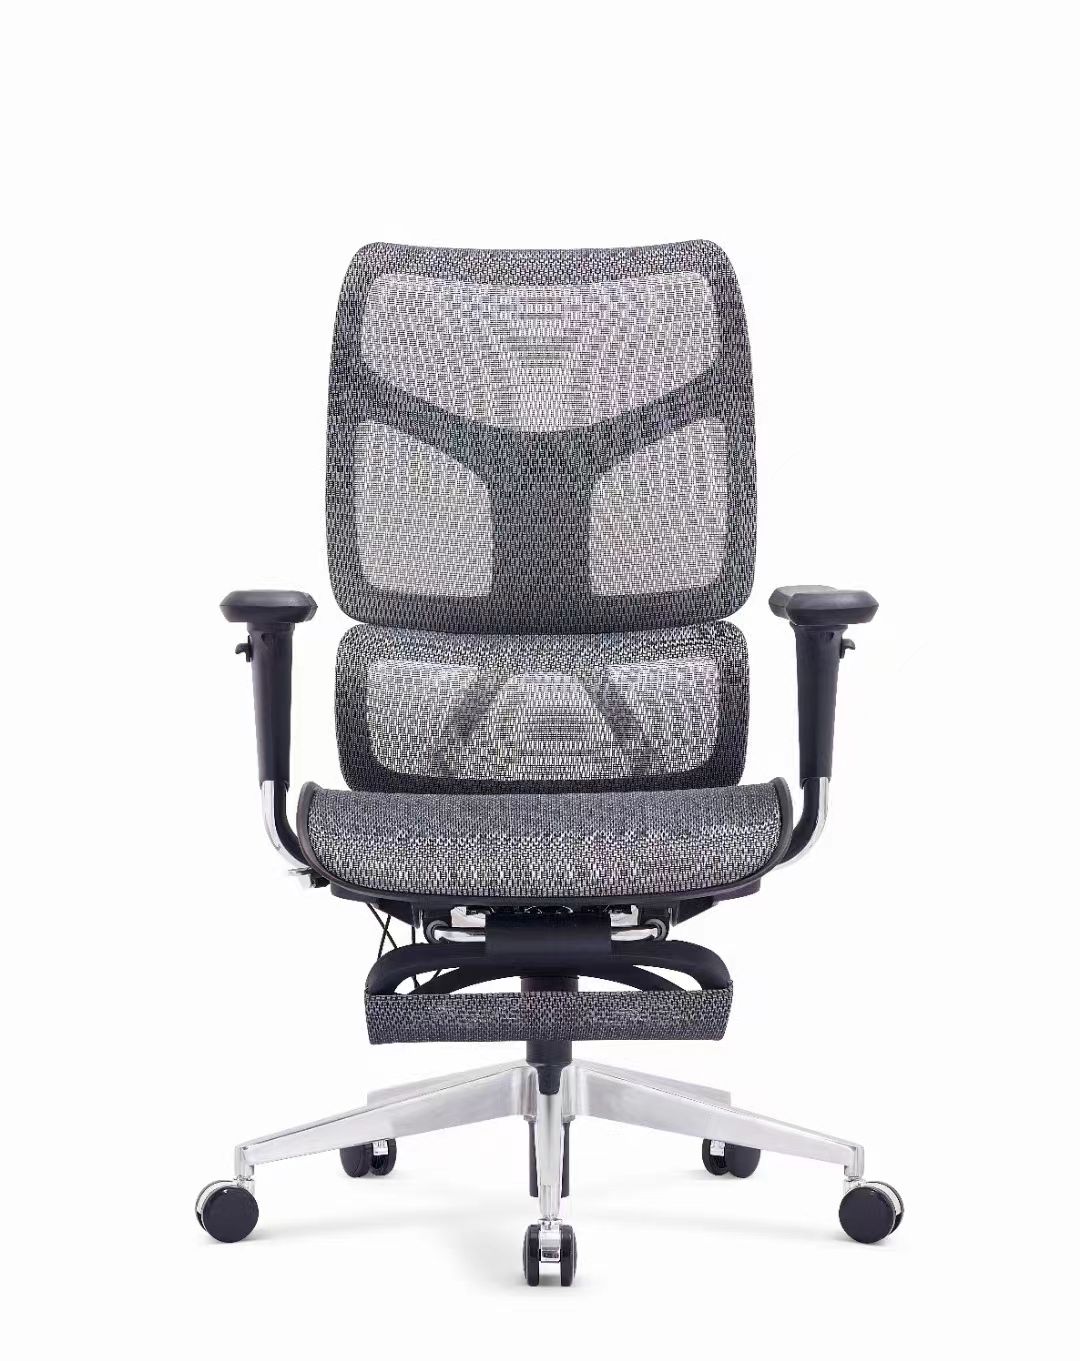 Home Ergonomic Office Chair